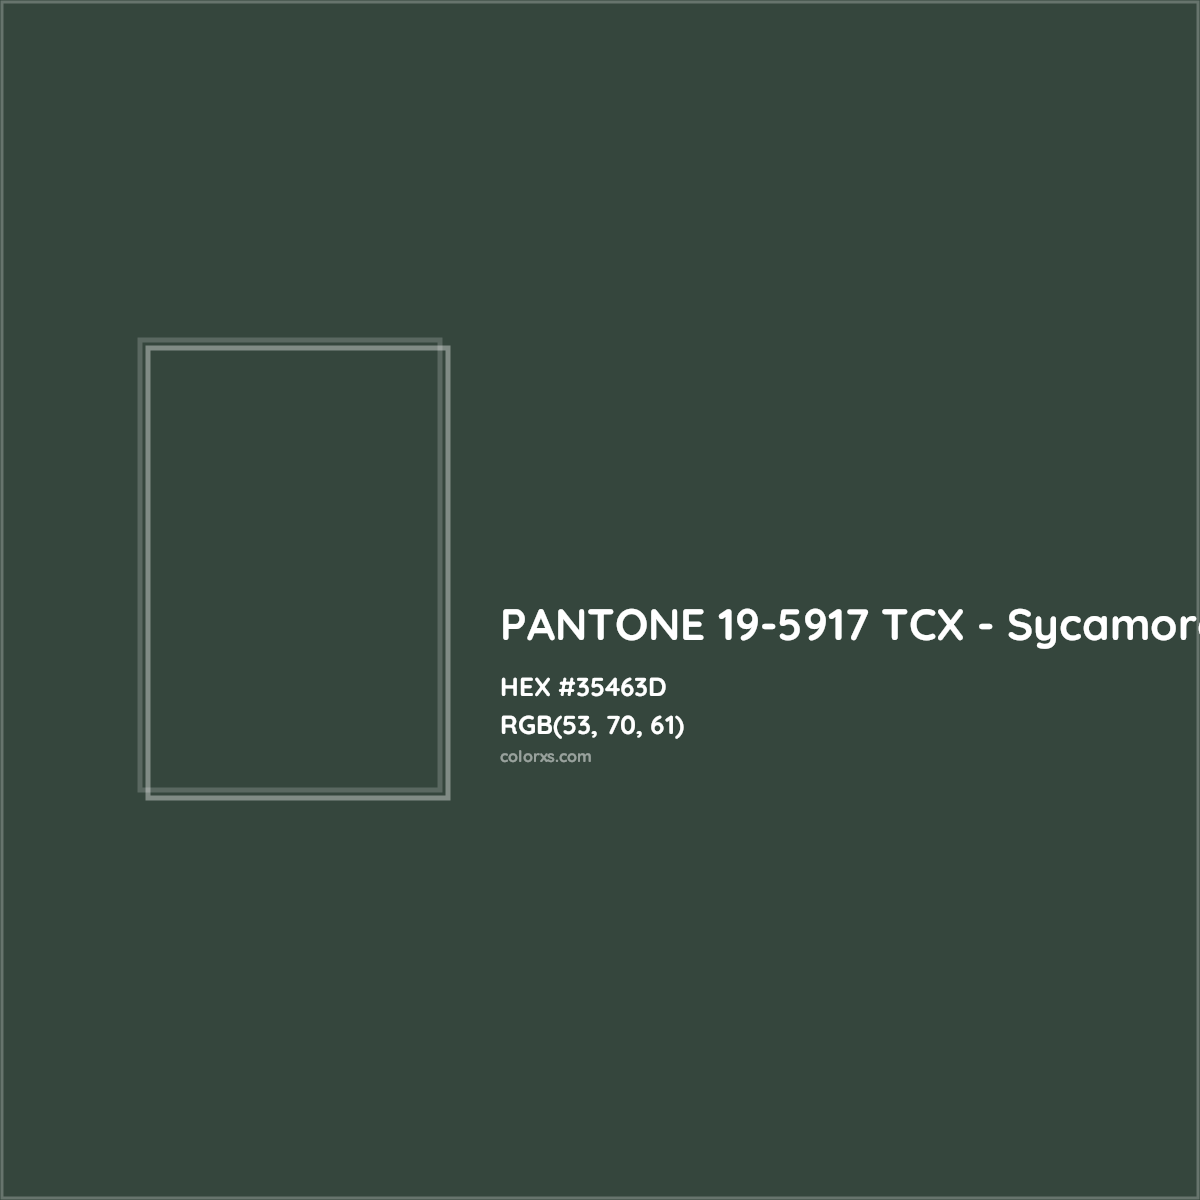 HEX #35463D PANTONE 19-5917 TCX - Sycamore CMS Pantone TCX - Color Code